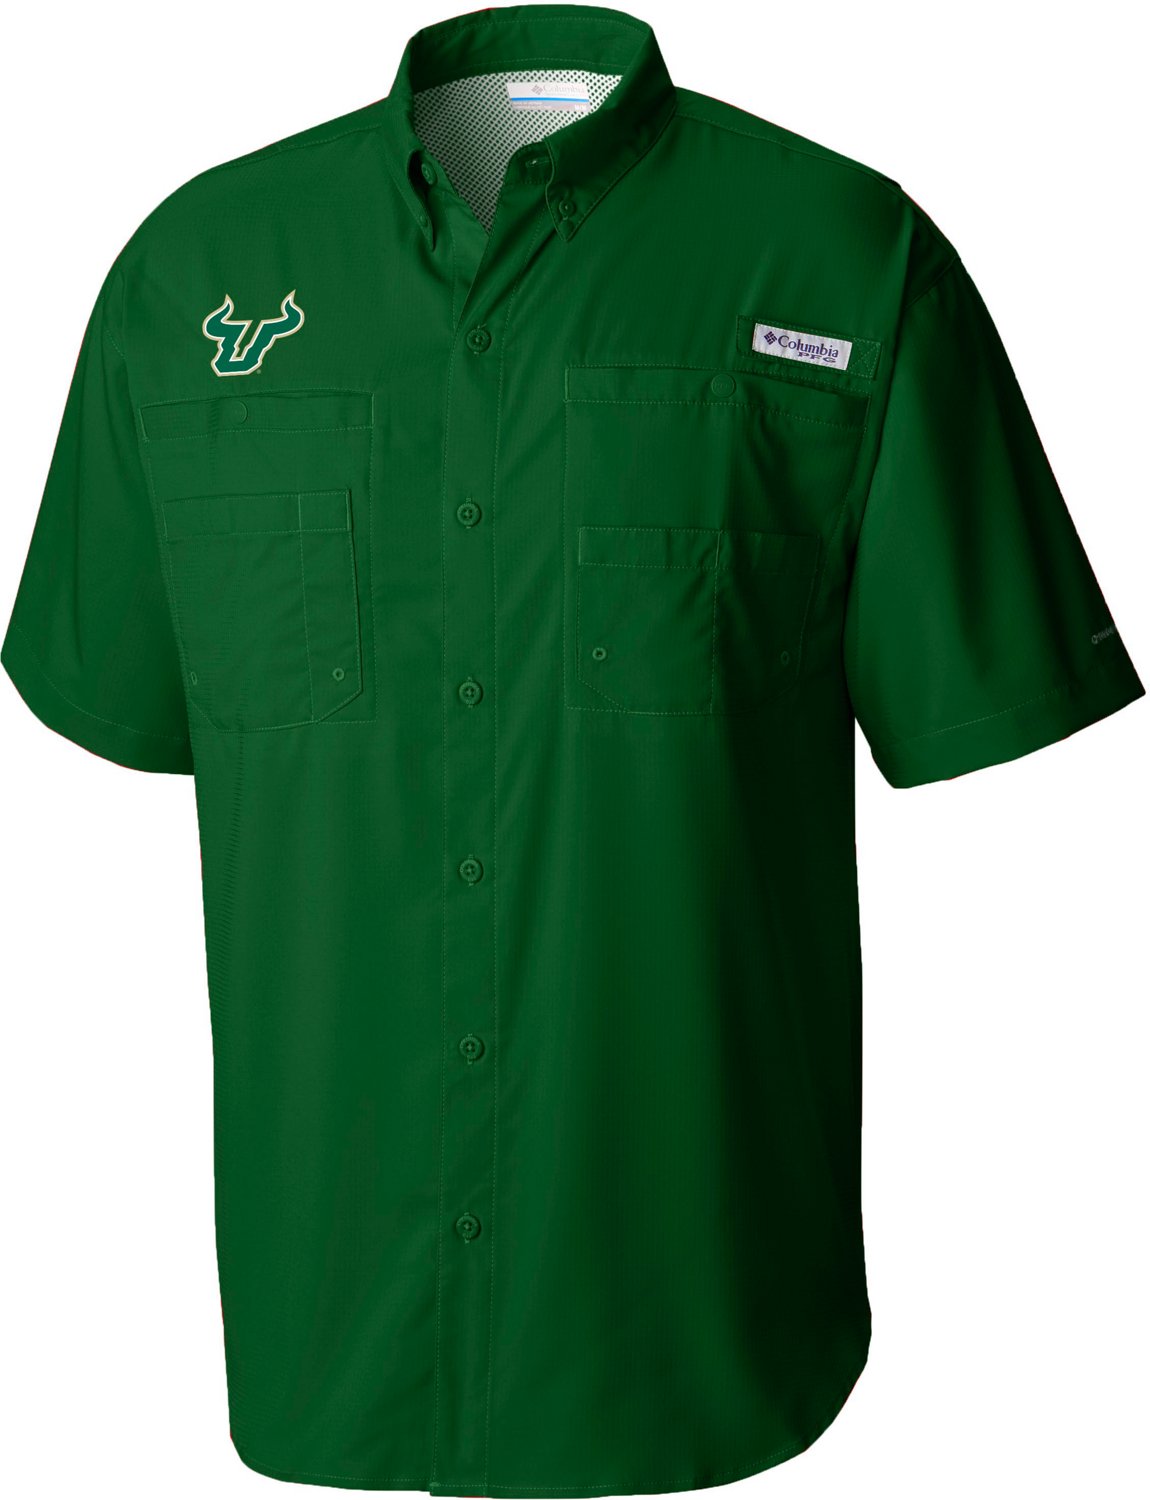 Columbia Sportswear Men's University of South Florida Tamiami Fishing Shirt